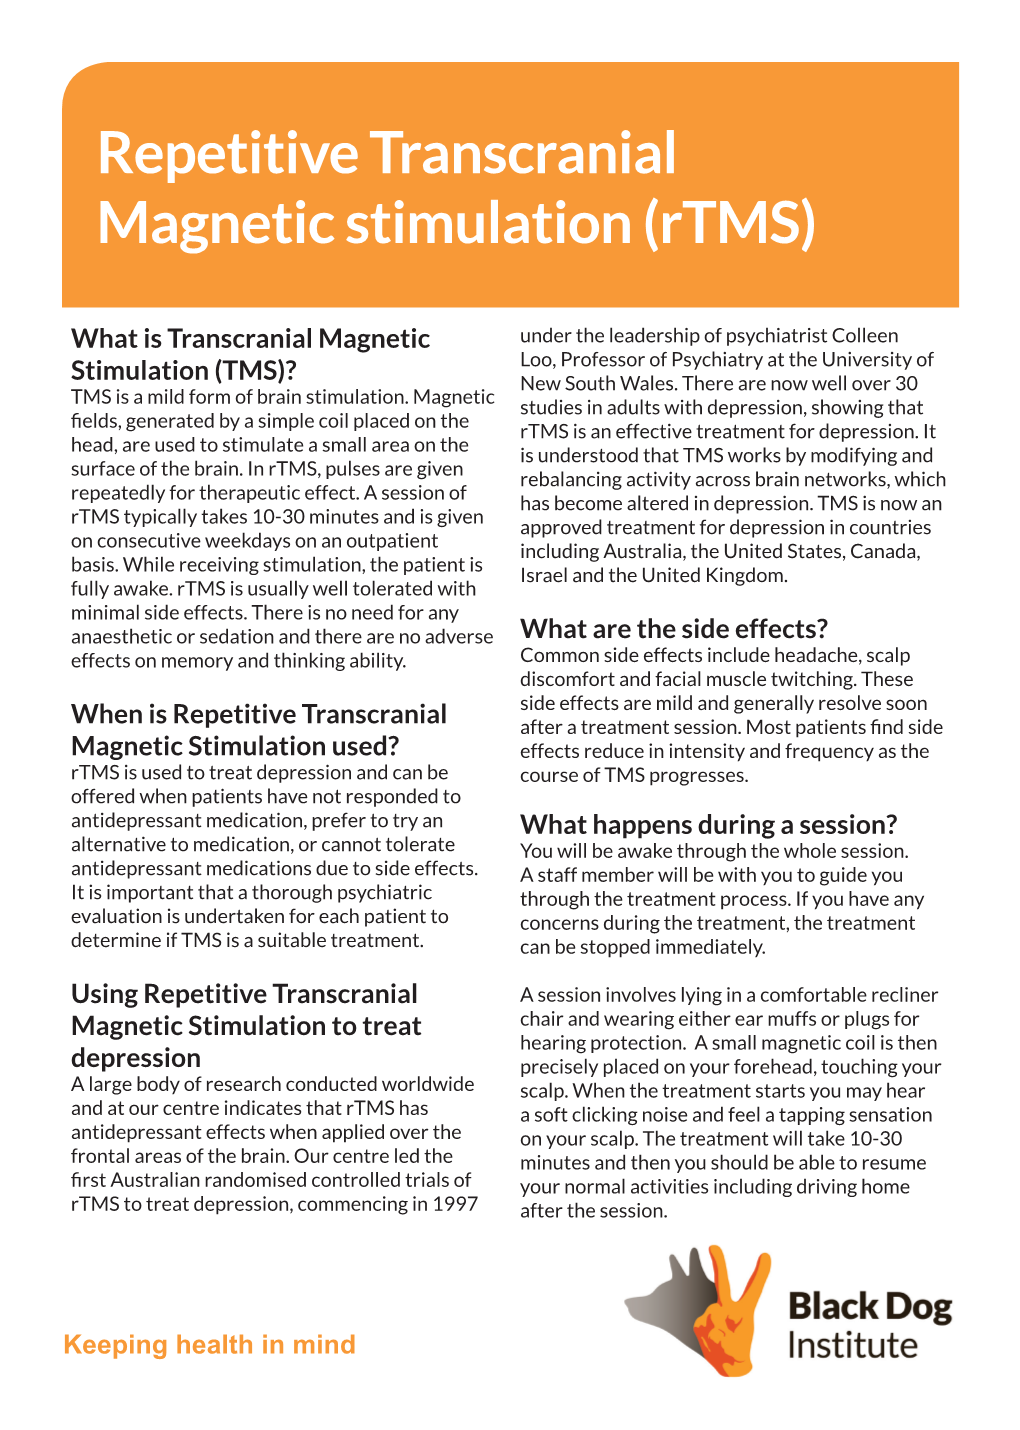 Repetitive Transcranial Magnetic Stimulation (Rtms)